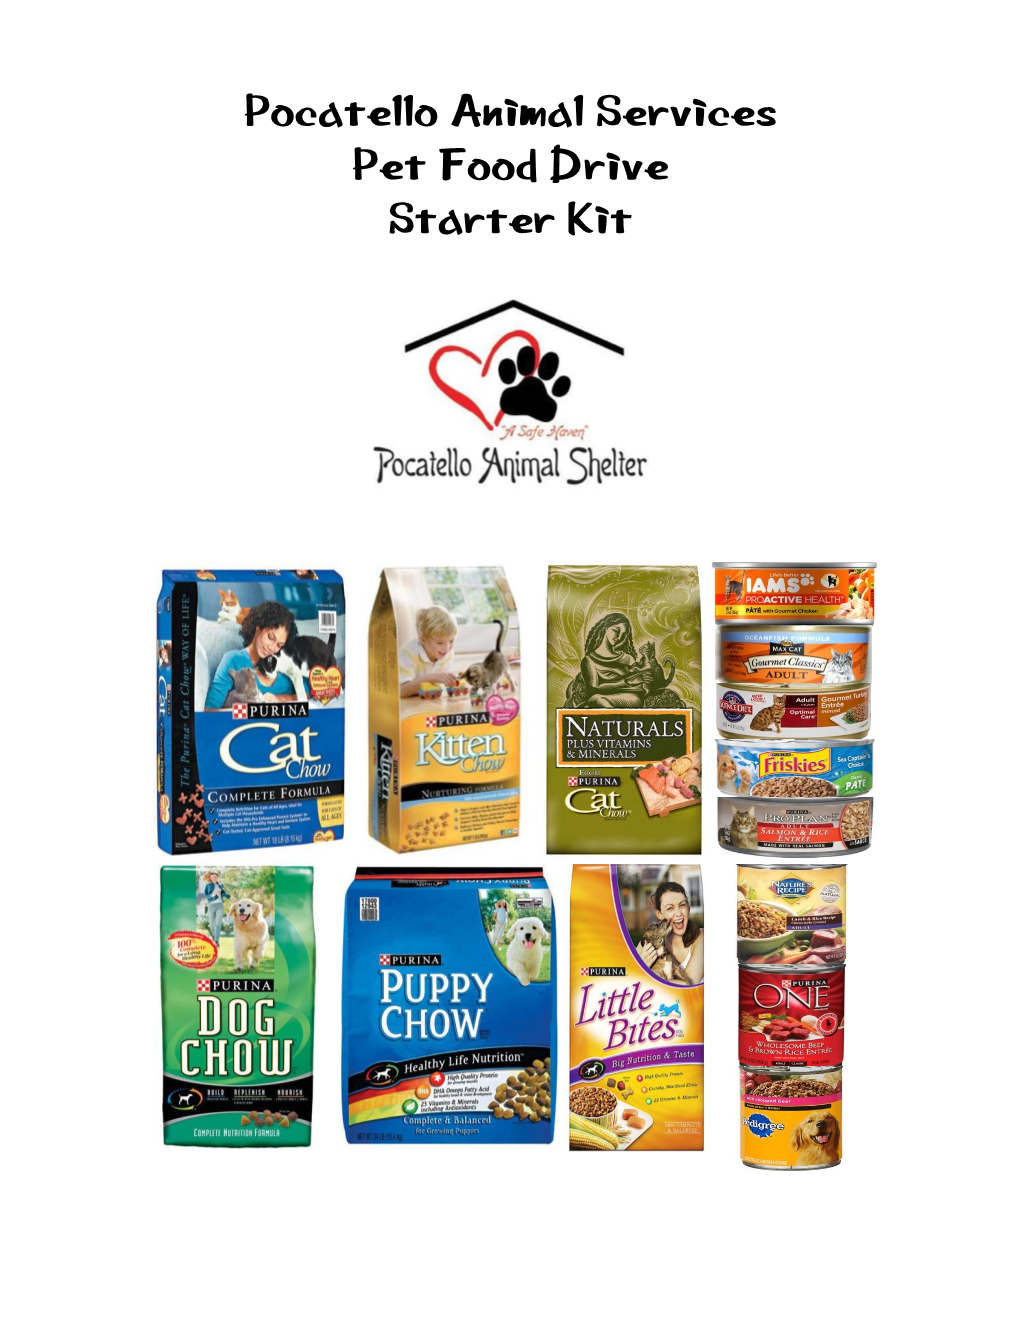 Pocatello Animal Services Pet Food Drive Starter Kit